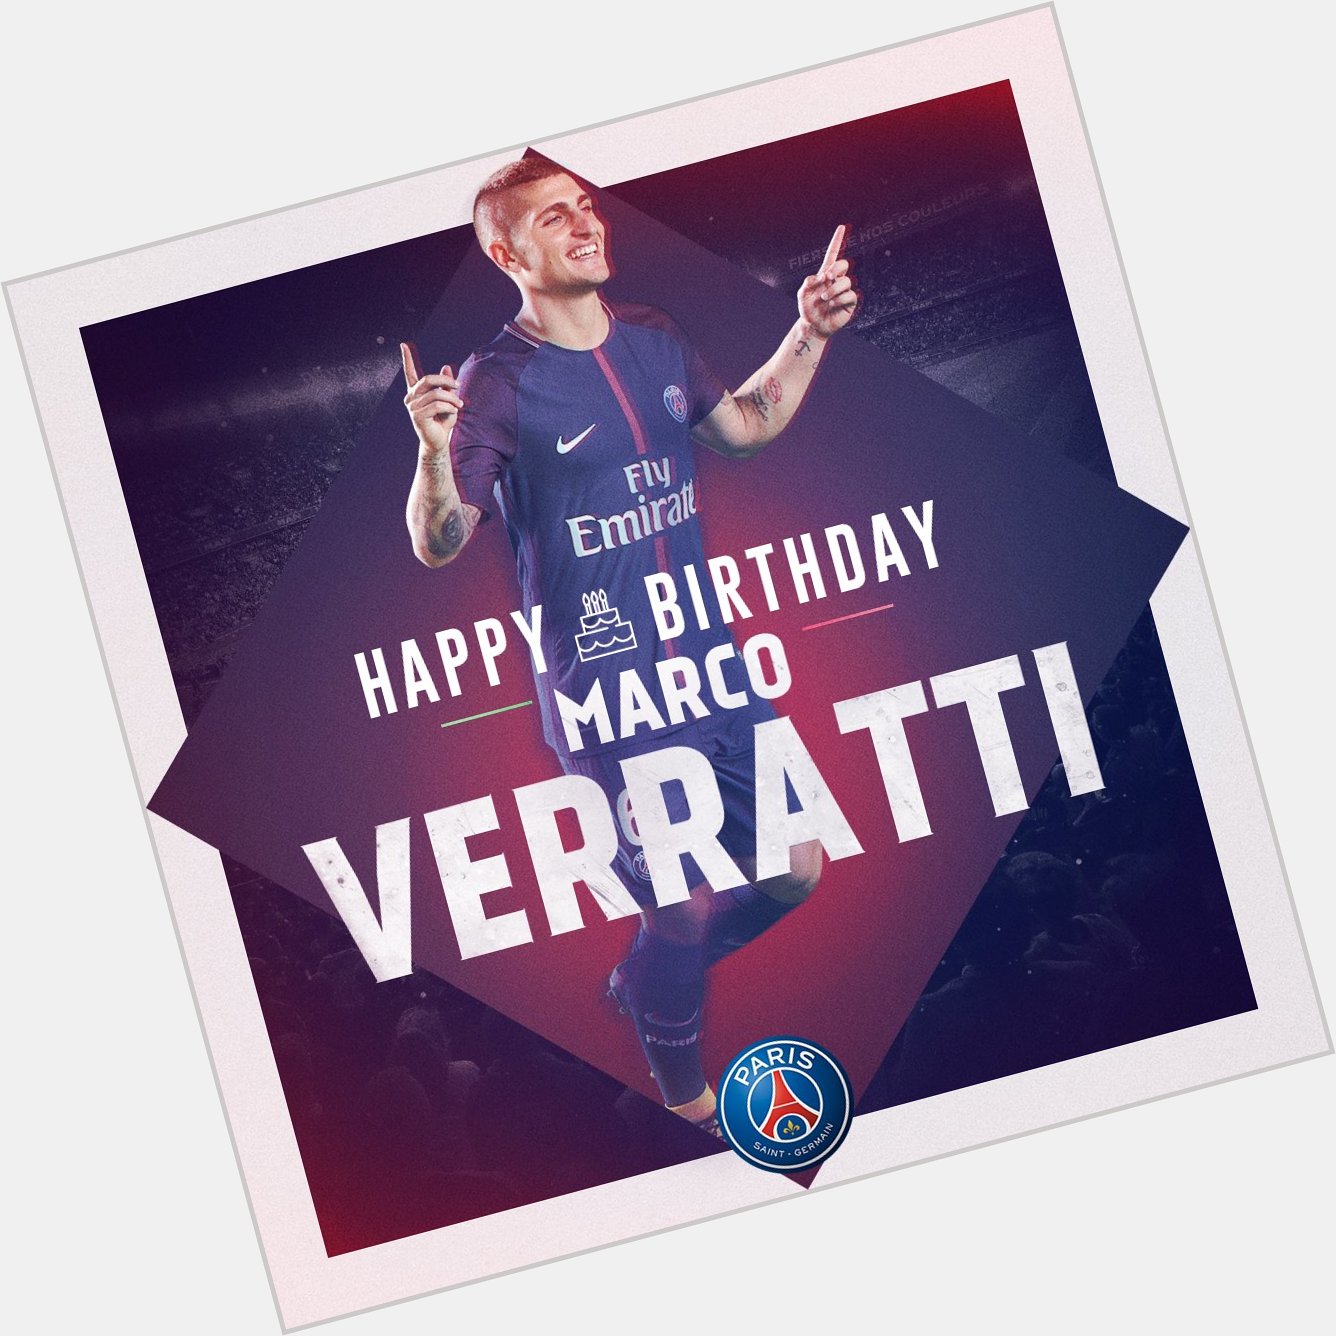     Marco Verratti 2  5  Happy birthday !!!!! 